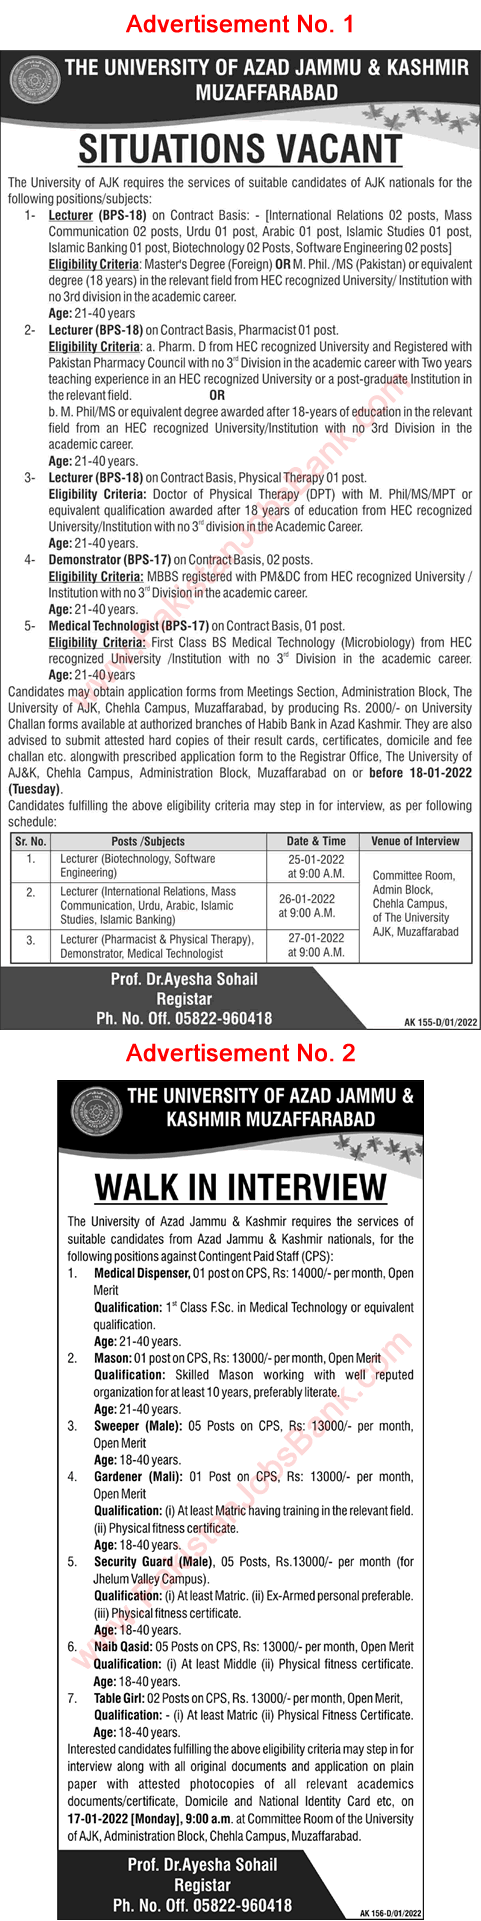 University of AJK Muzaffarabad Jobs 2022 Lecturers & Others Walk in Interview Latest